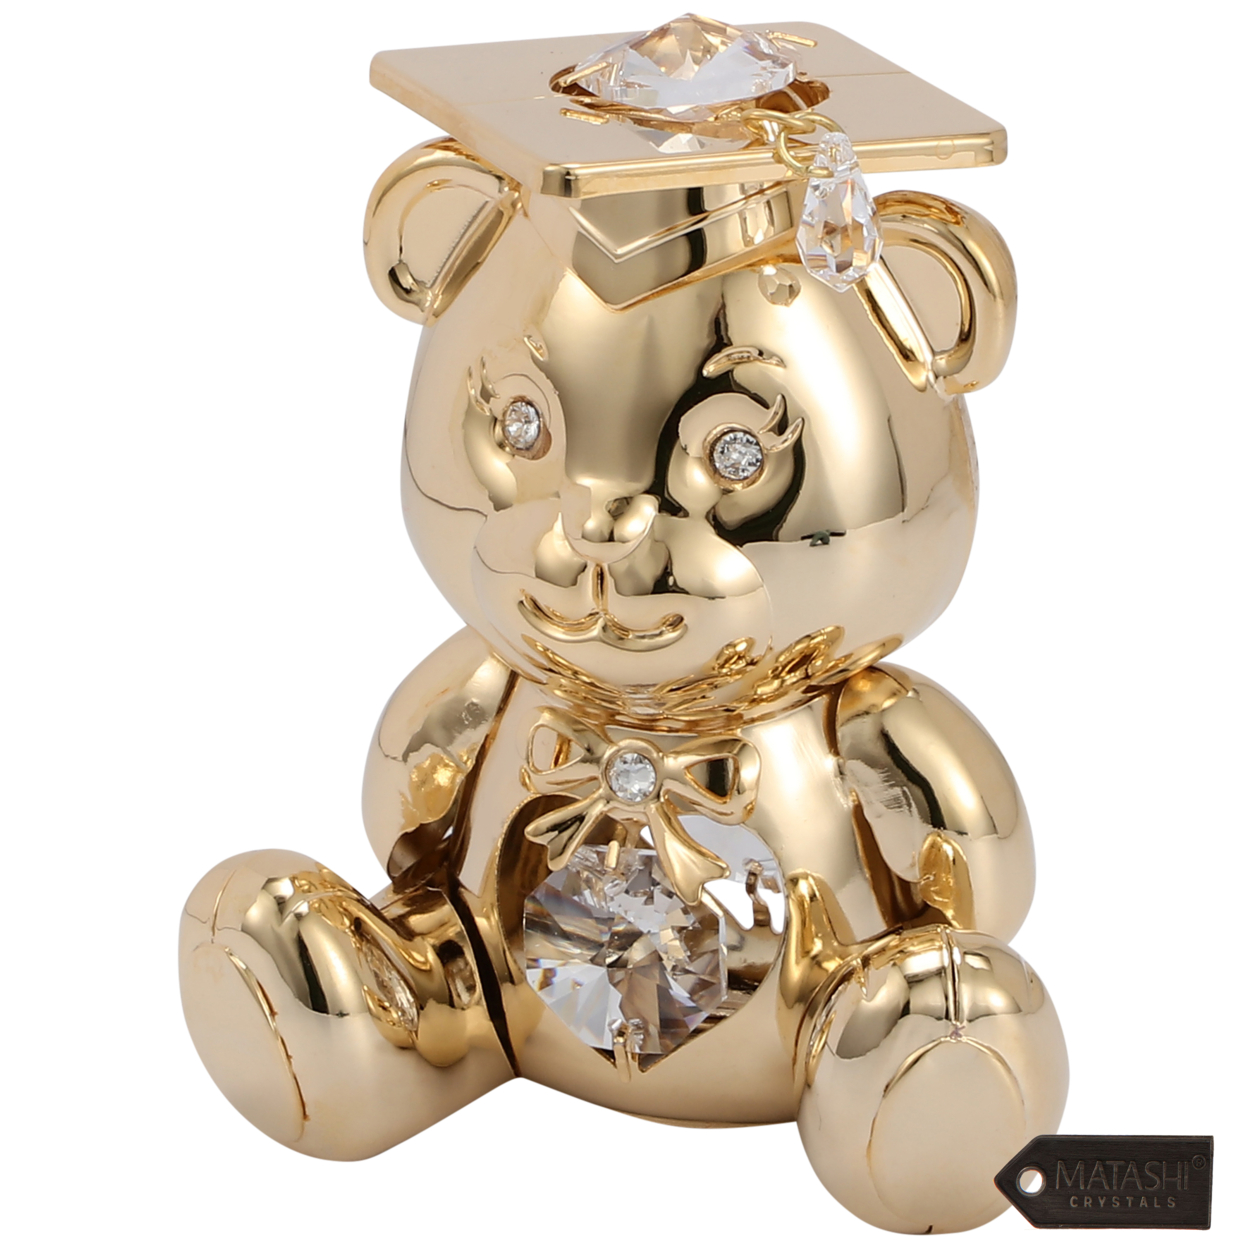 Matashi 24K Gold Plated Graduation Bear With Matashi Crystals Holiday Decor Gift For Christmas Mother's Day Birthday Anniversary